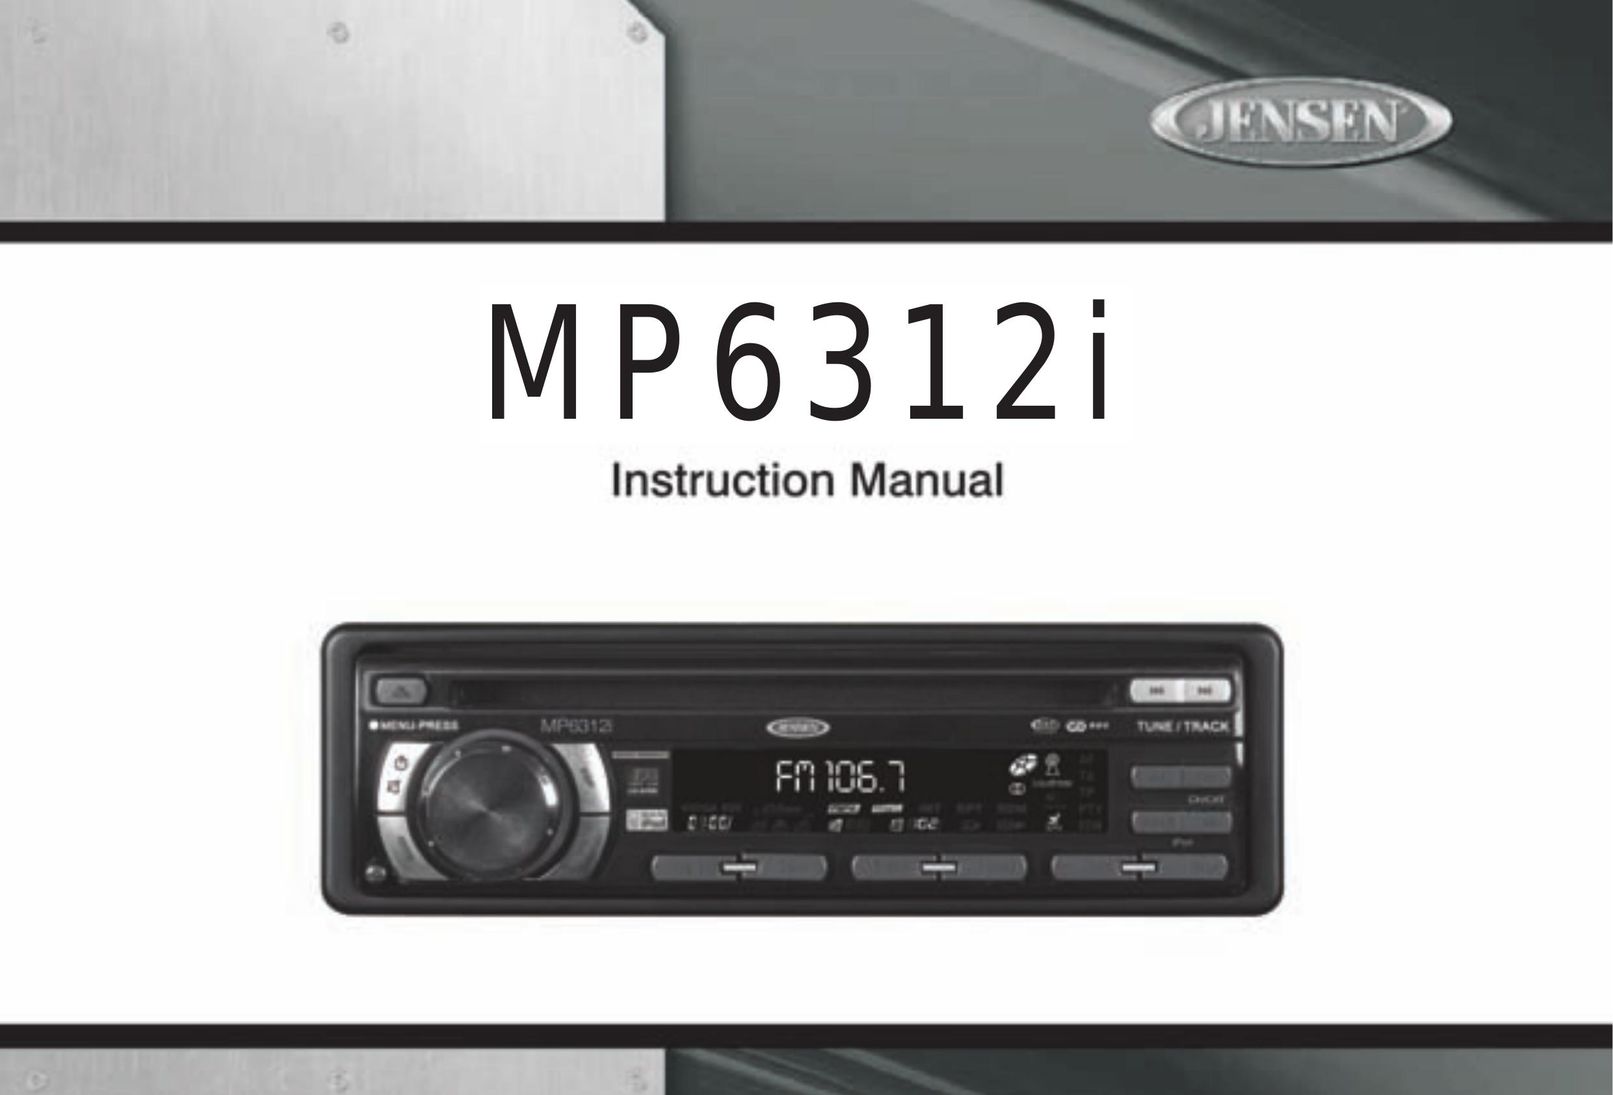 Jensen MP6312i Car Stereo System User Manual